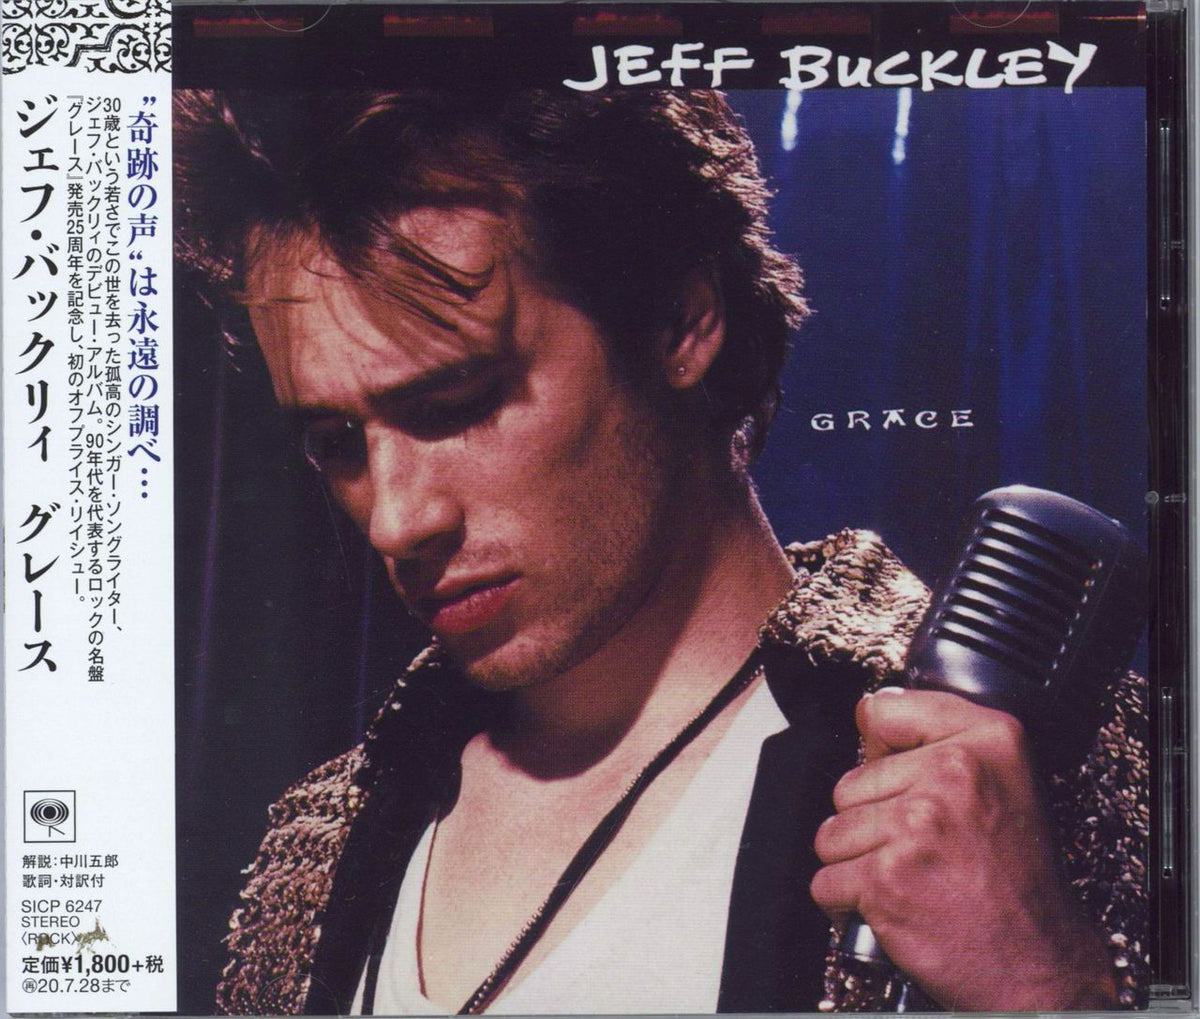 Stænke etage Viva Jeff Buckley Grace Japanese CD album — RareVinyl.com